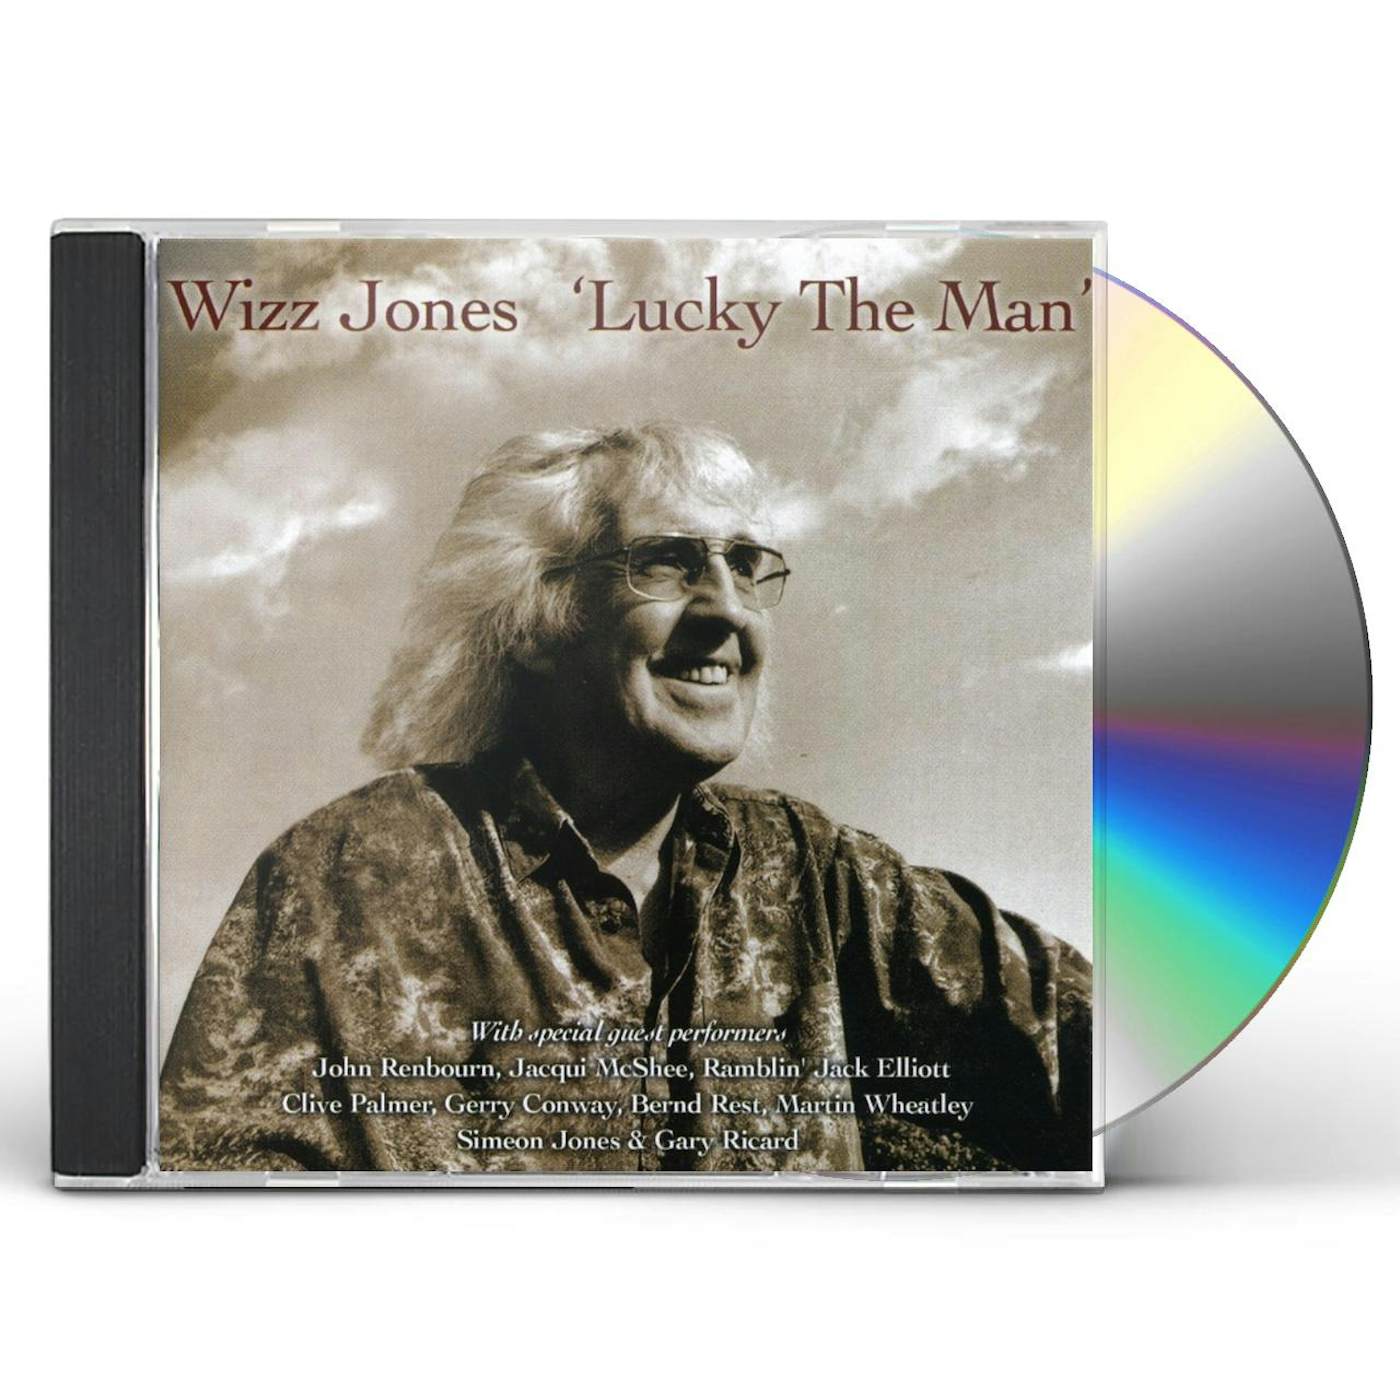 Wizz Jones LUCKY THE MAN CD